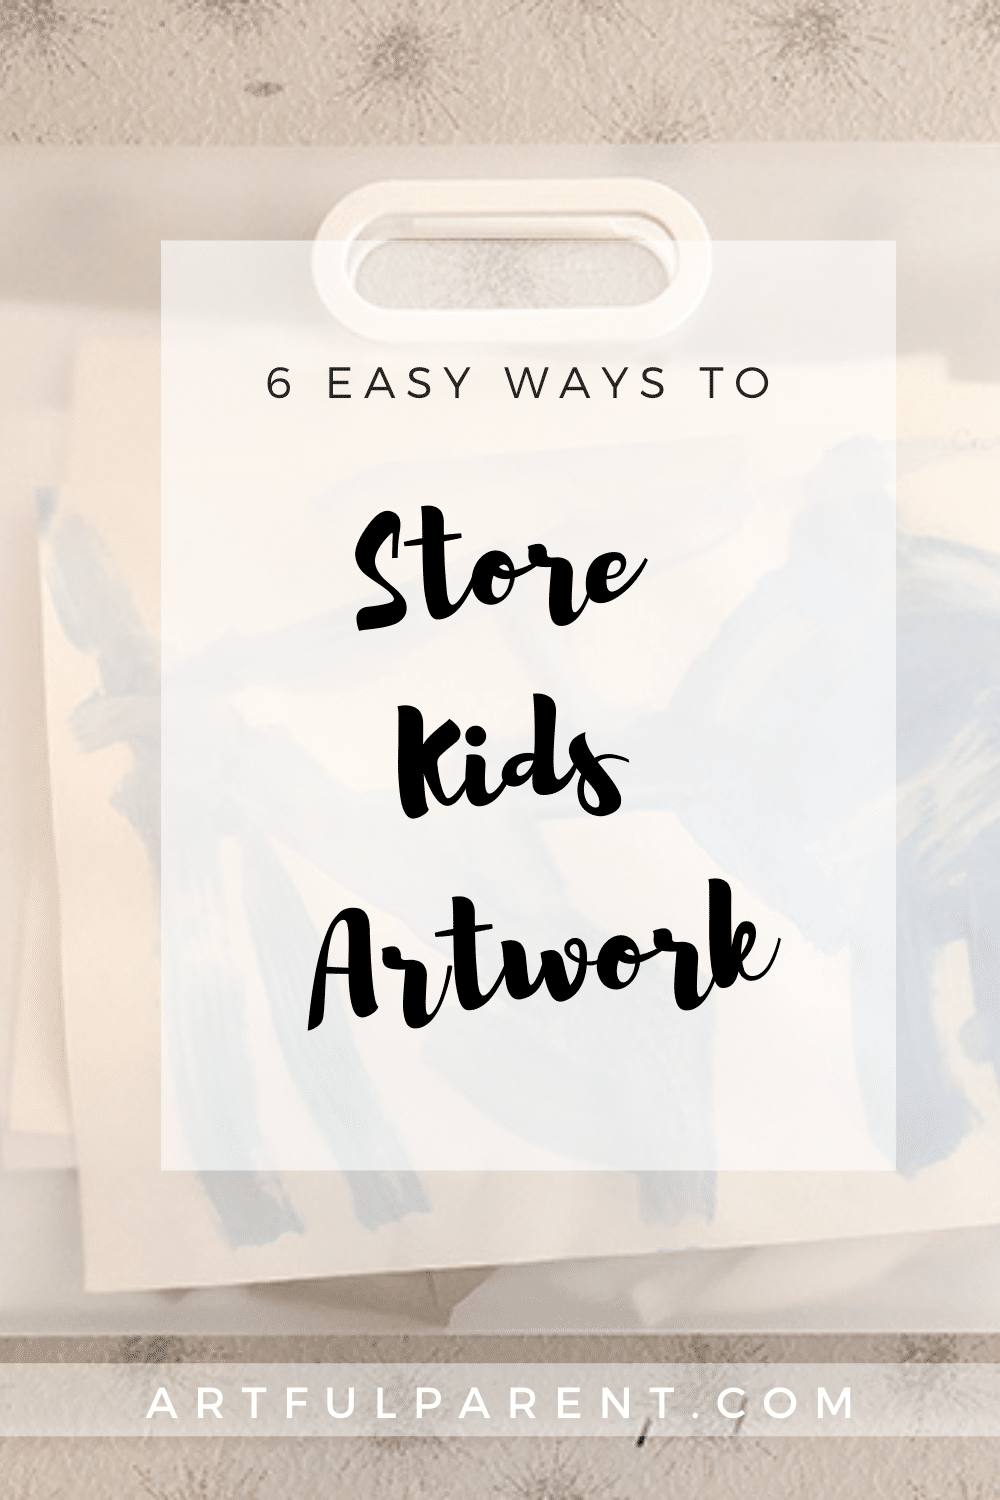 6 Easy Ways to Store Kids Artwork